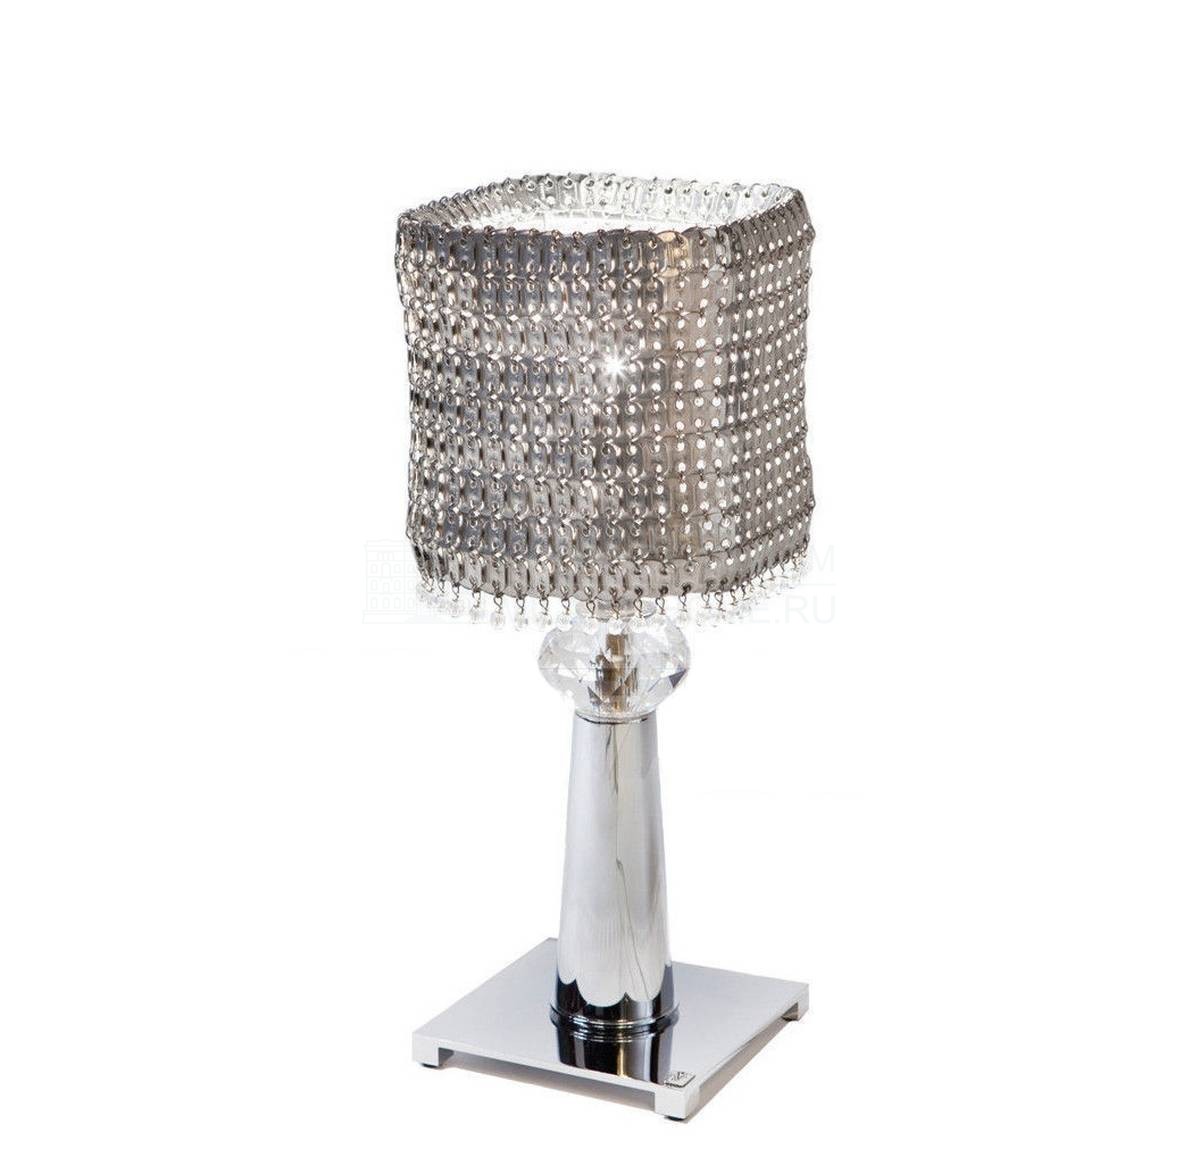 Настольная лампа Excalibur crystal mini из Италии фабрики IPE CAVALLI VISIONNAIRE